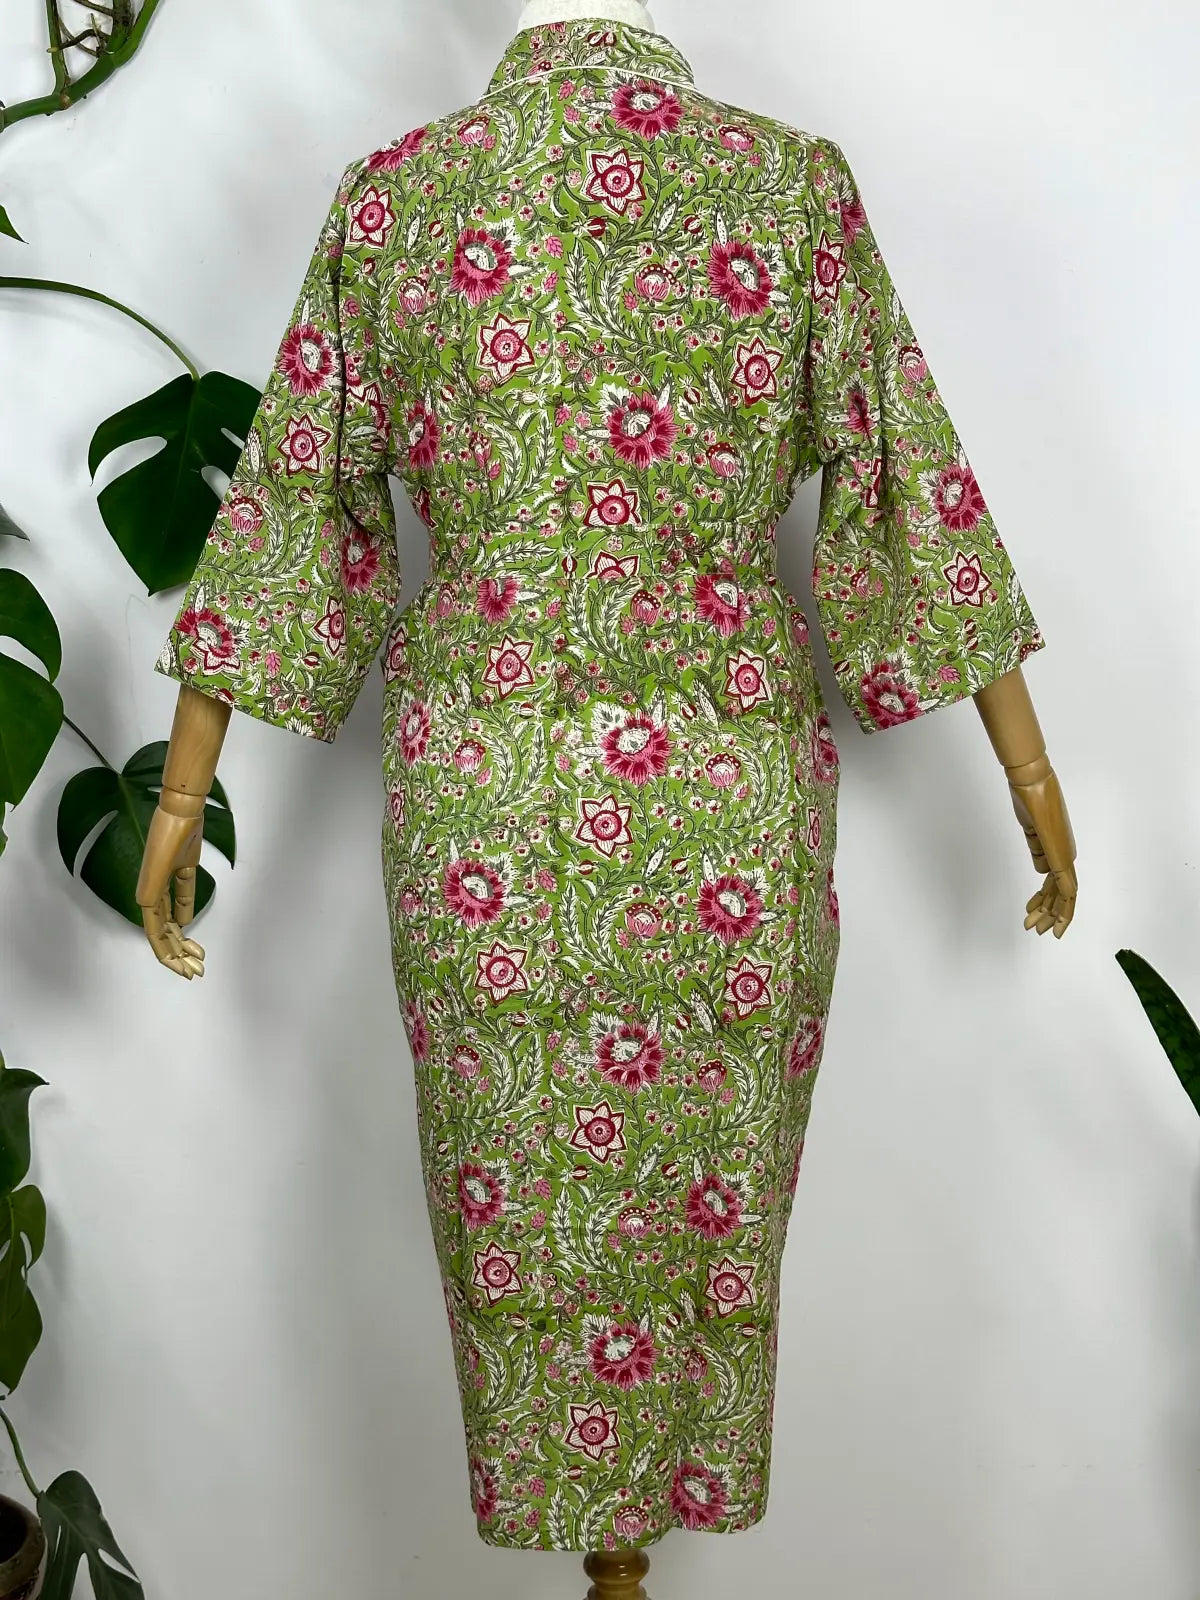 Pure Cotton Handmade Kimono Artisanal Boho House Bath Robe Spring Summer Fashion Cardigan | Beach Cover Up Bridesmaid Dressing Gown Gift Her